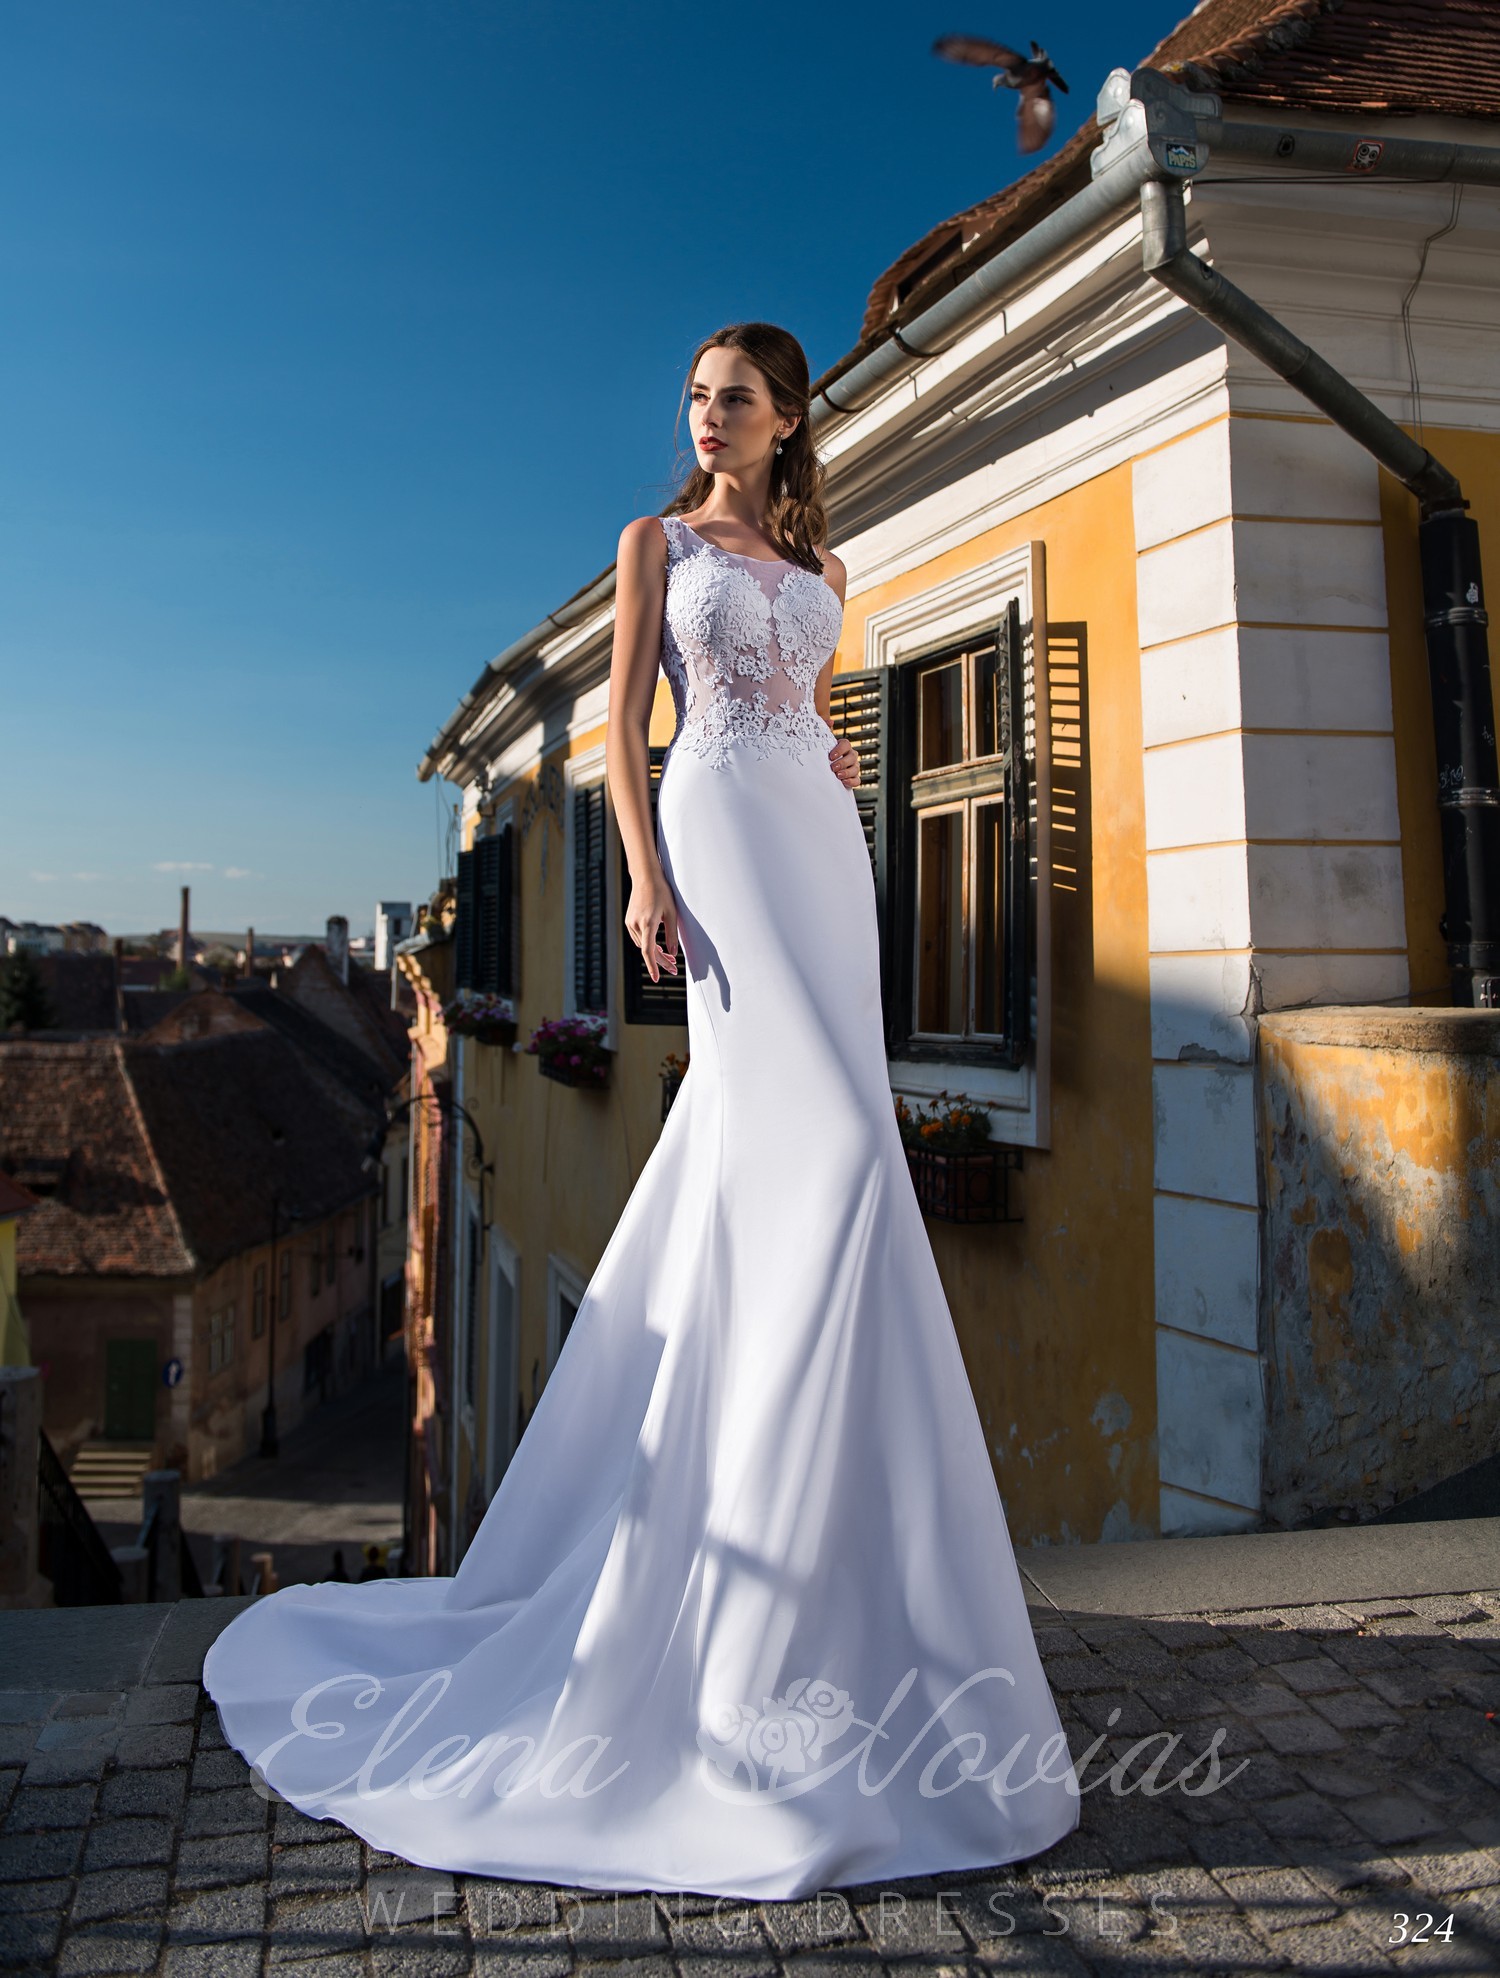 Light wedding dress with train wholesale from Elena Novias